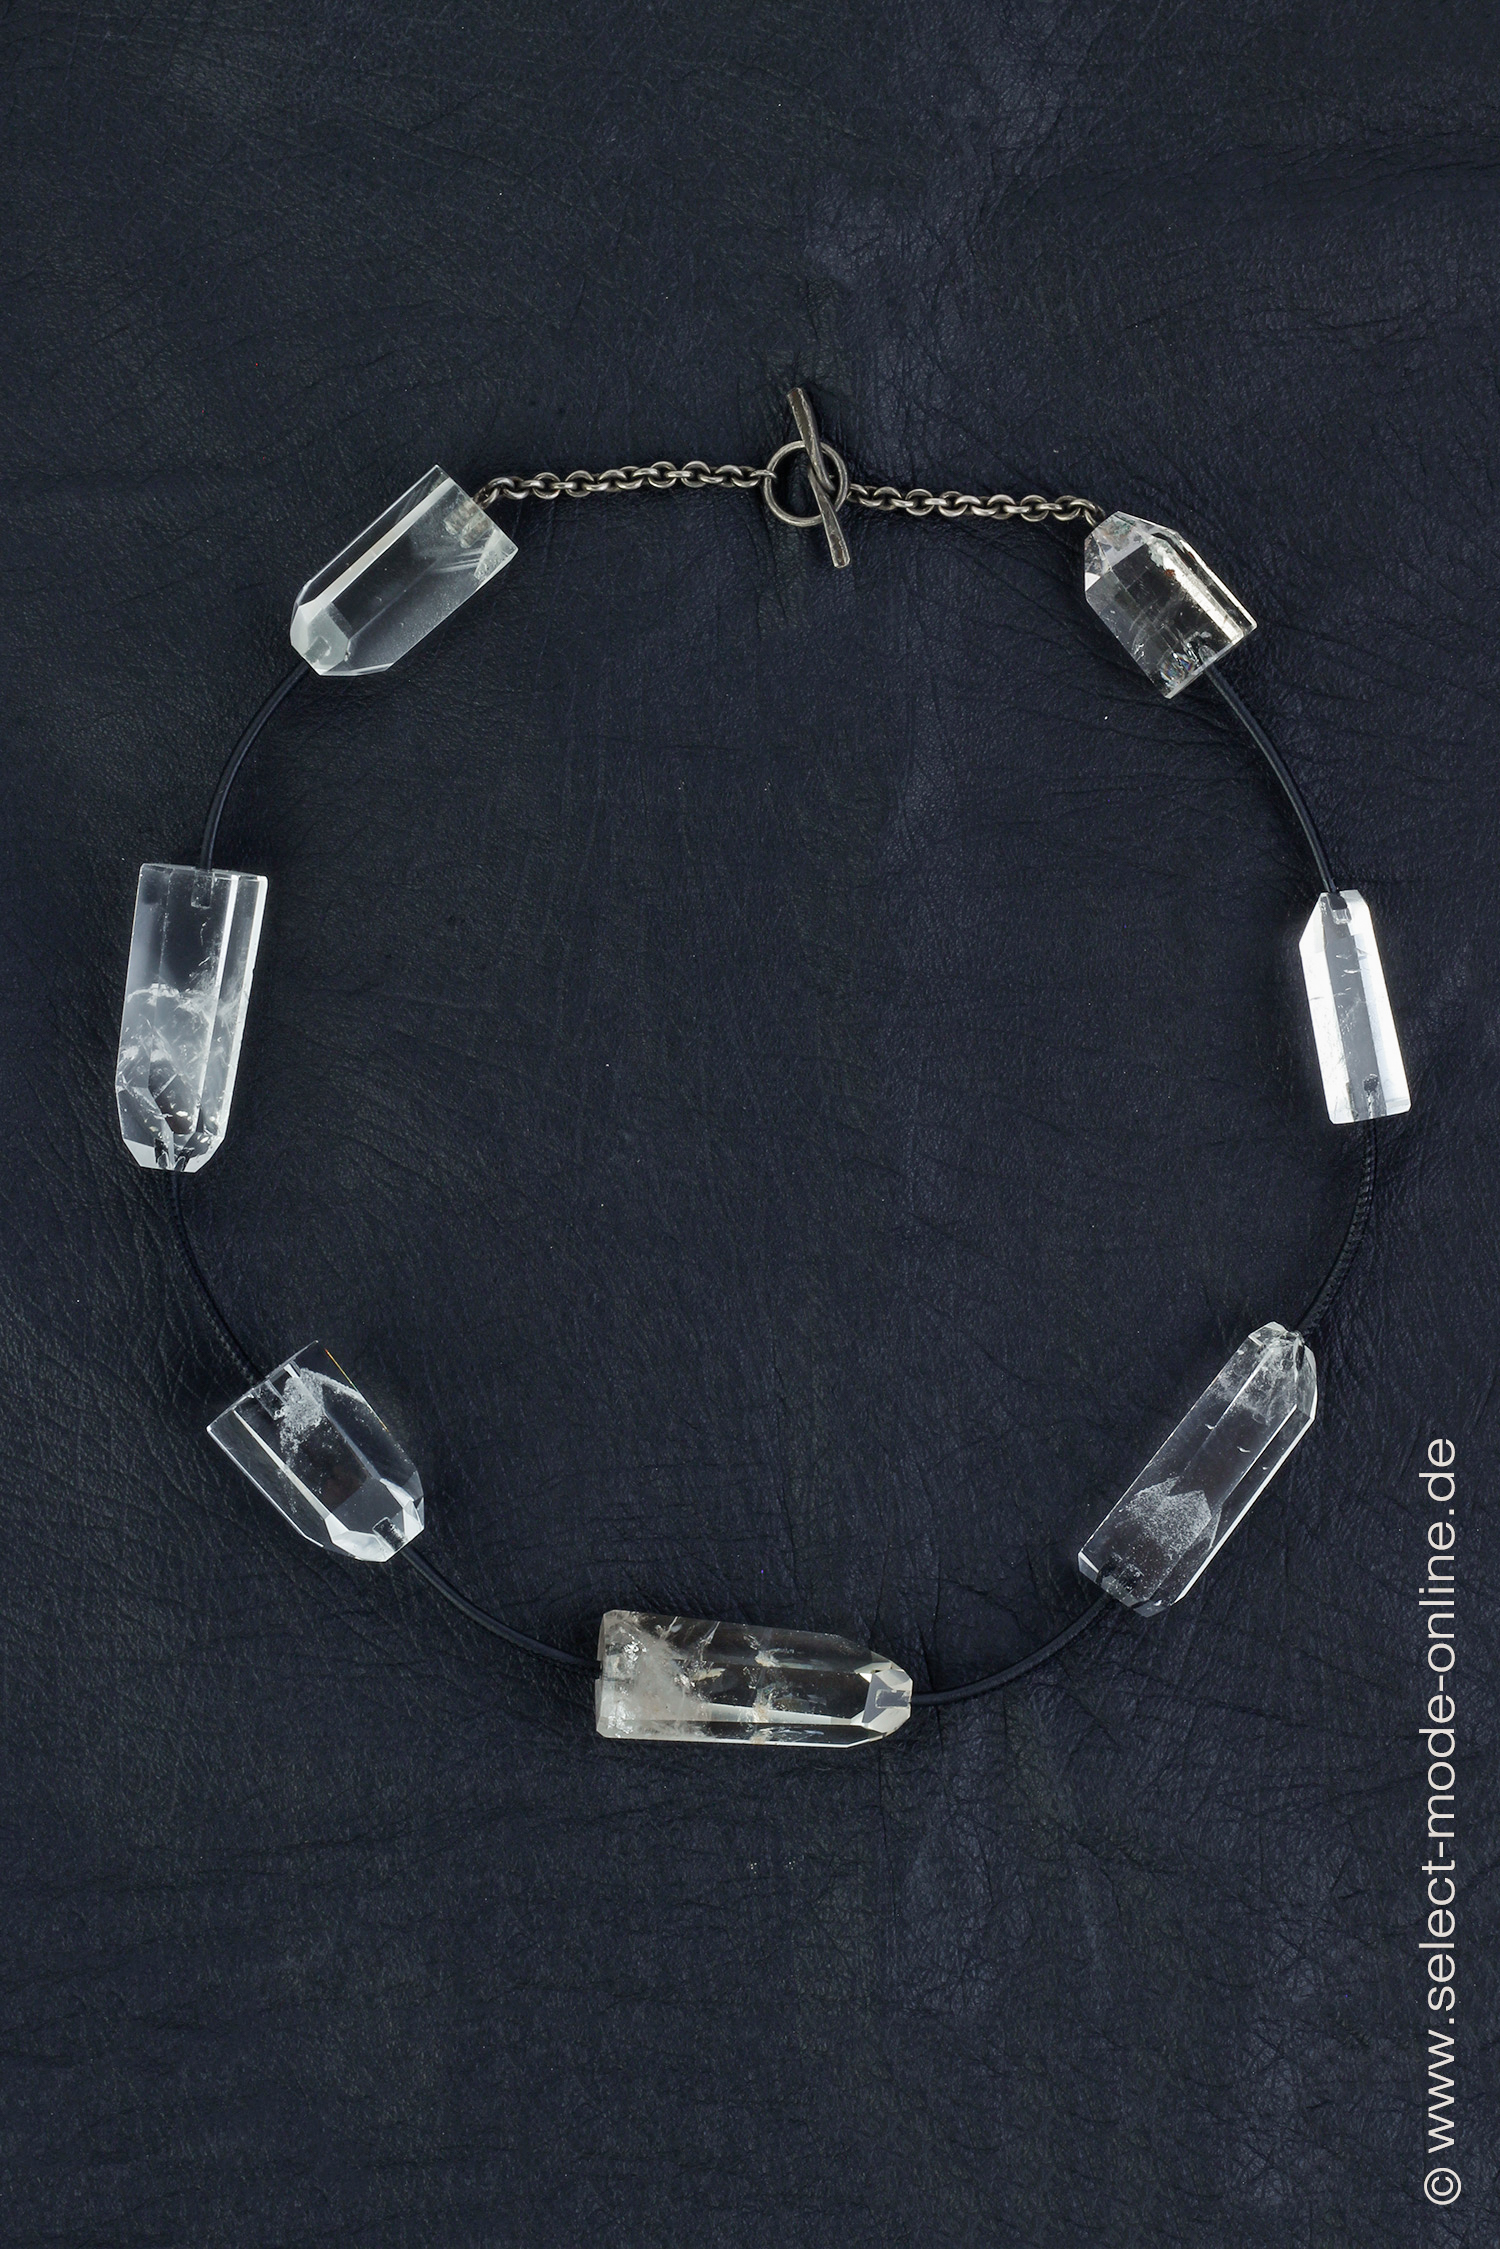 Necklace with rock crystals - DG013